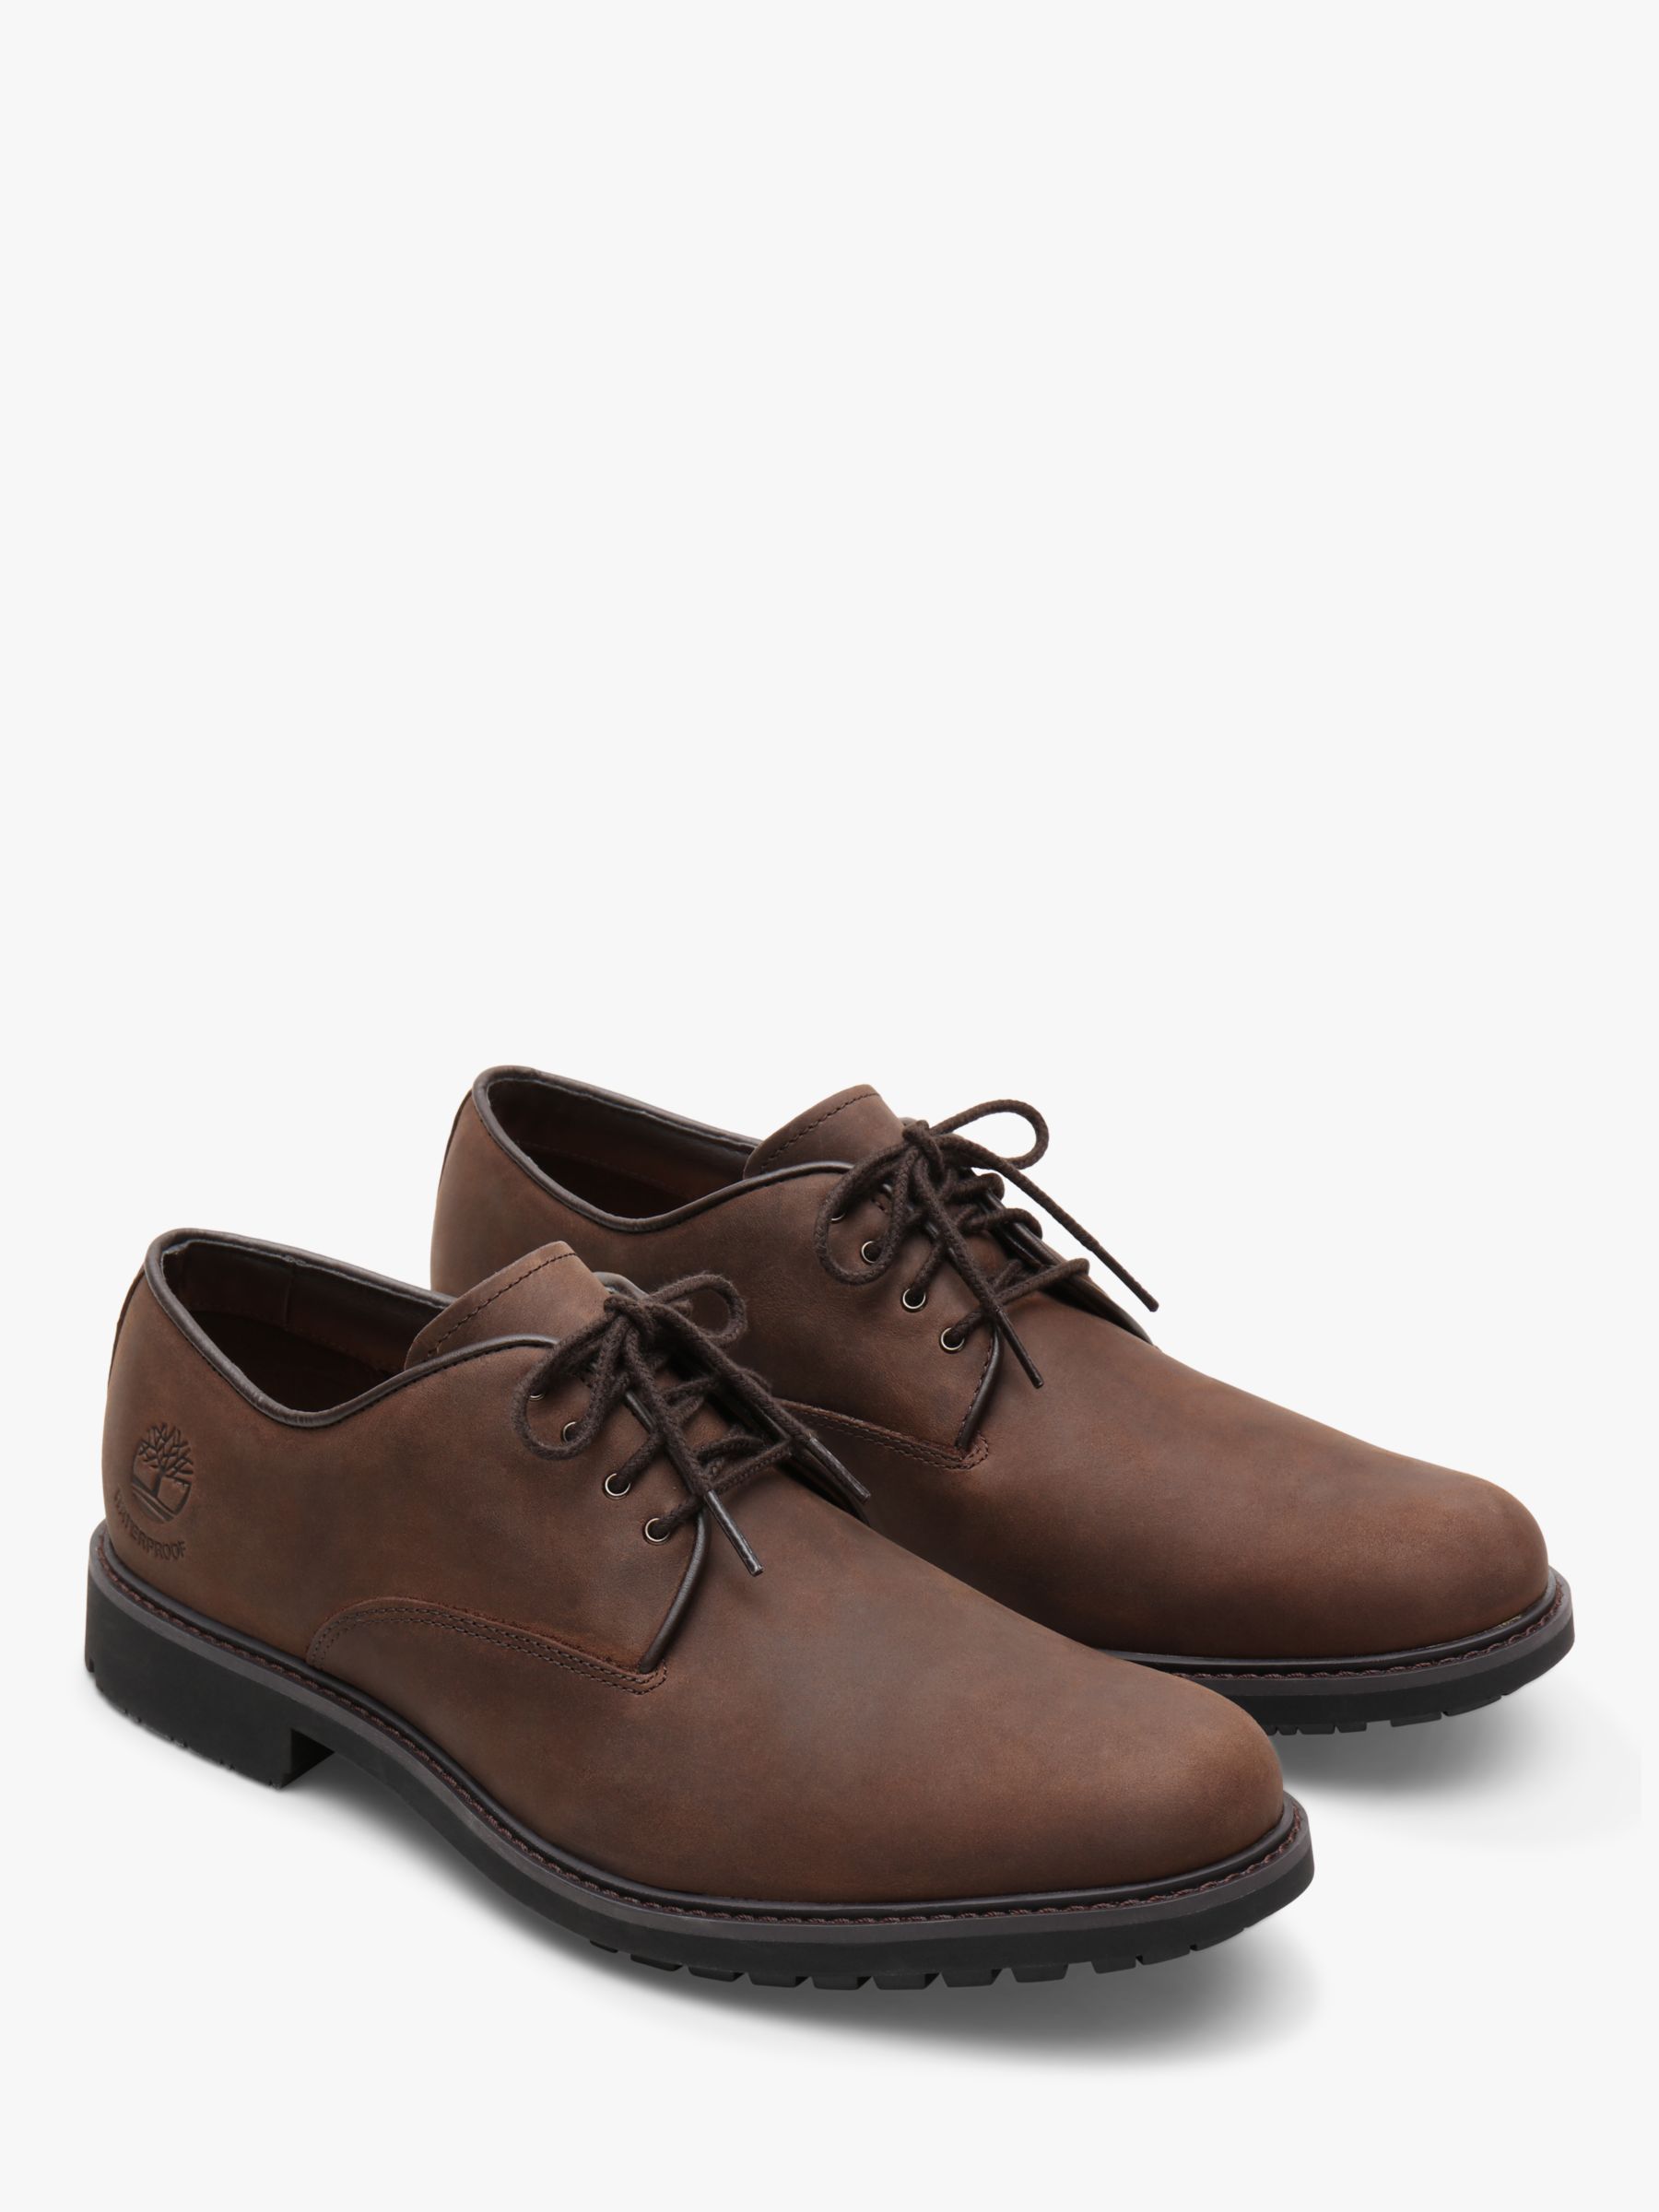 Timberland Stormbuck Waterproof Plain Toe Oxford Shoes, Dark Brown at ...